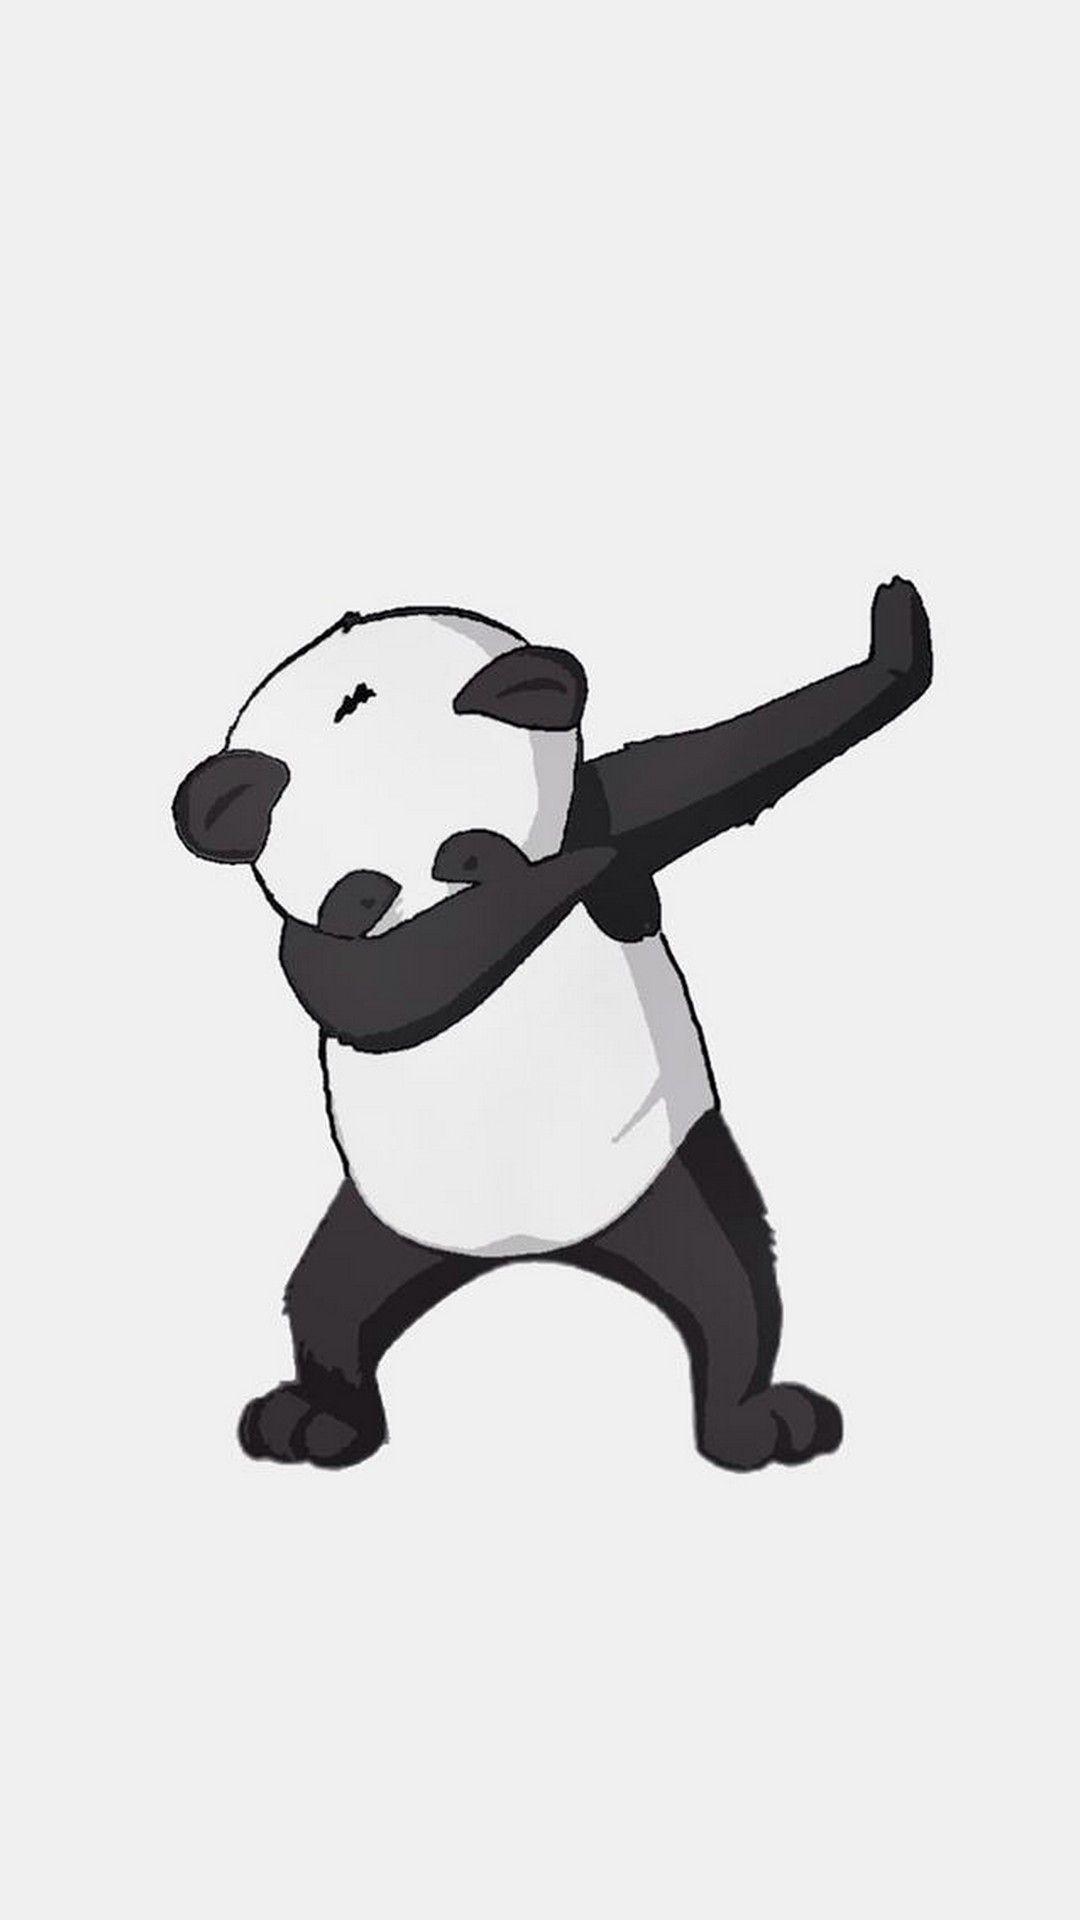 Cute Panda Dance Android Wallpaper Cute Wallpaper